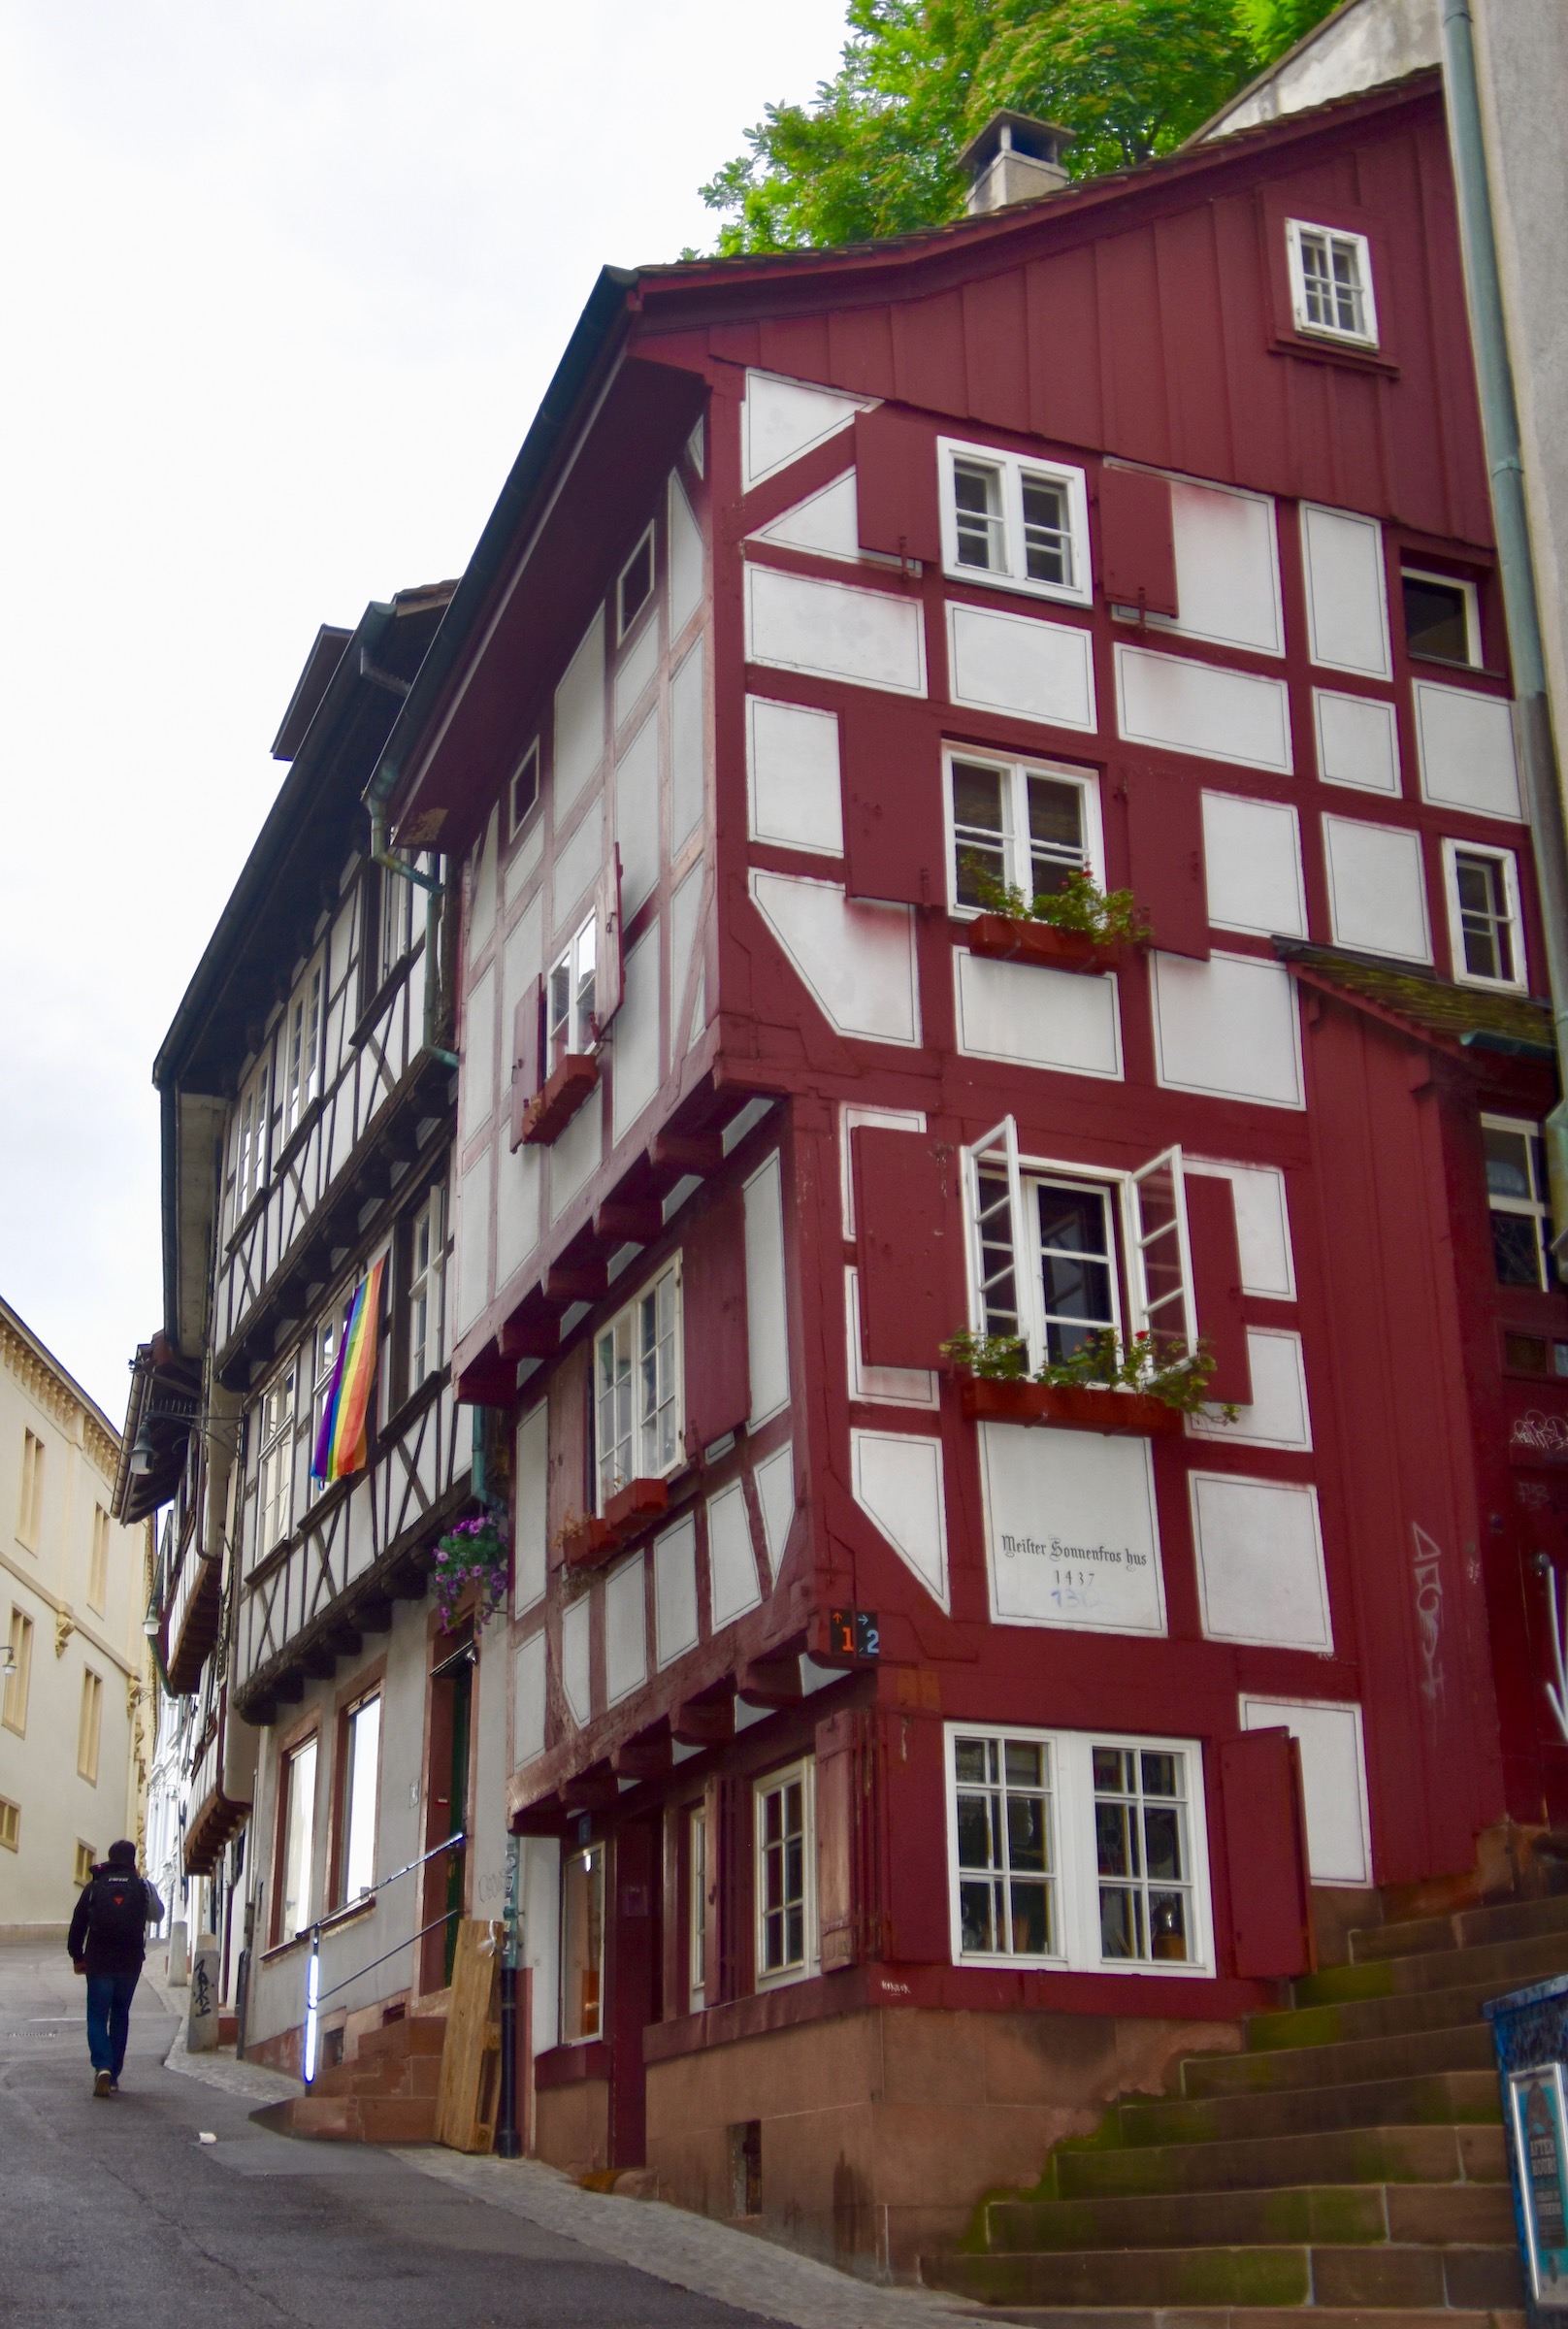 Oldest Houses in Basel